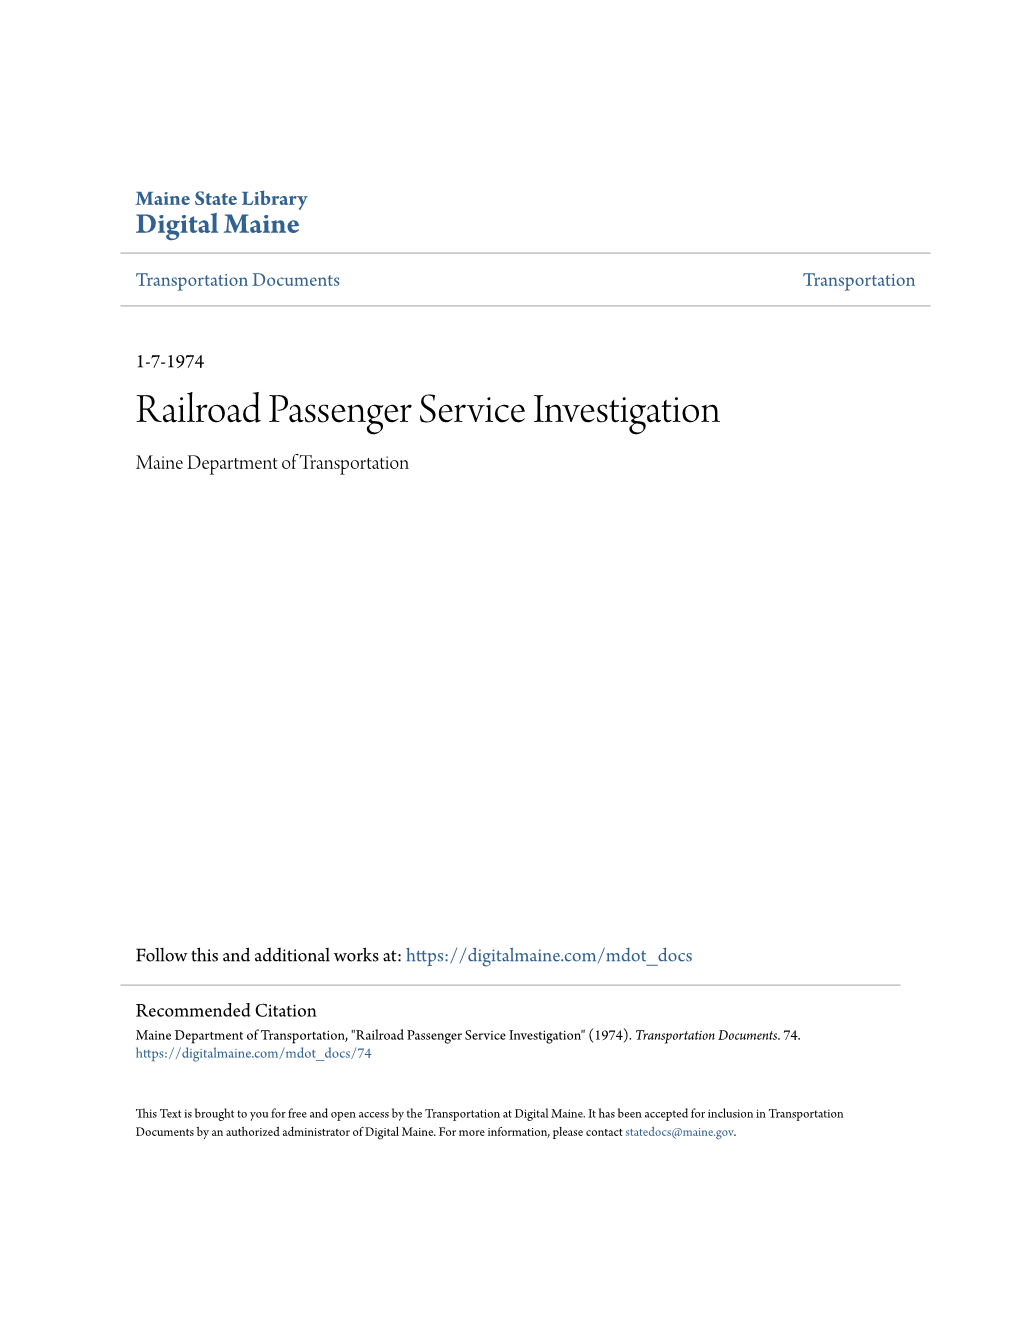 Railroad Passenger Service Investigation Maine Department of Transportation